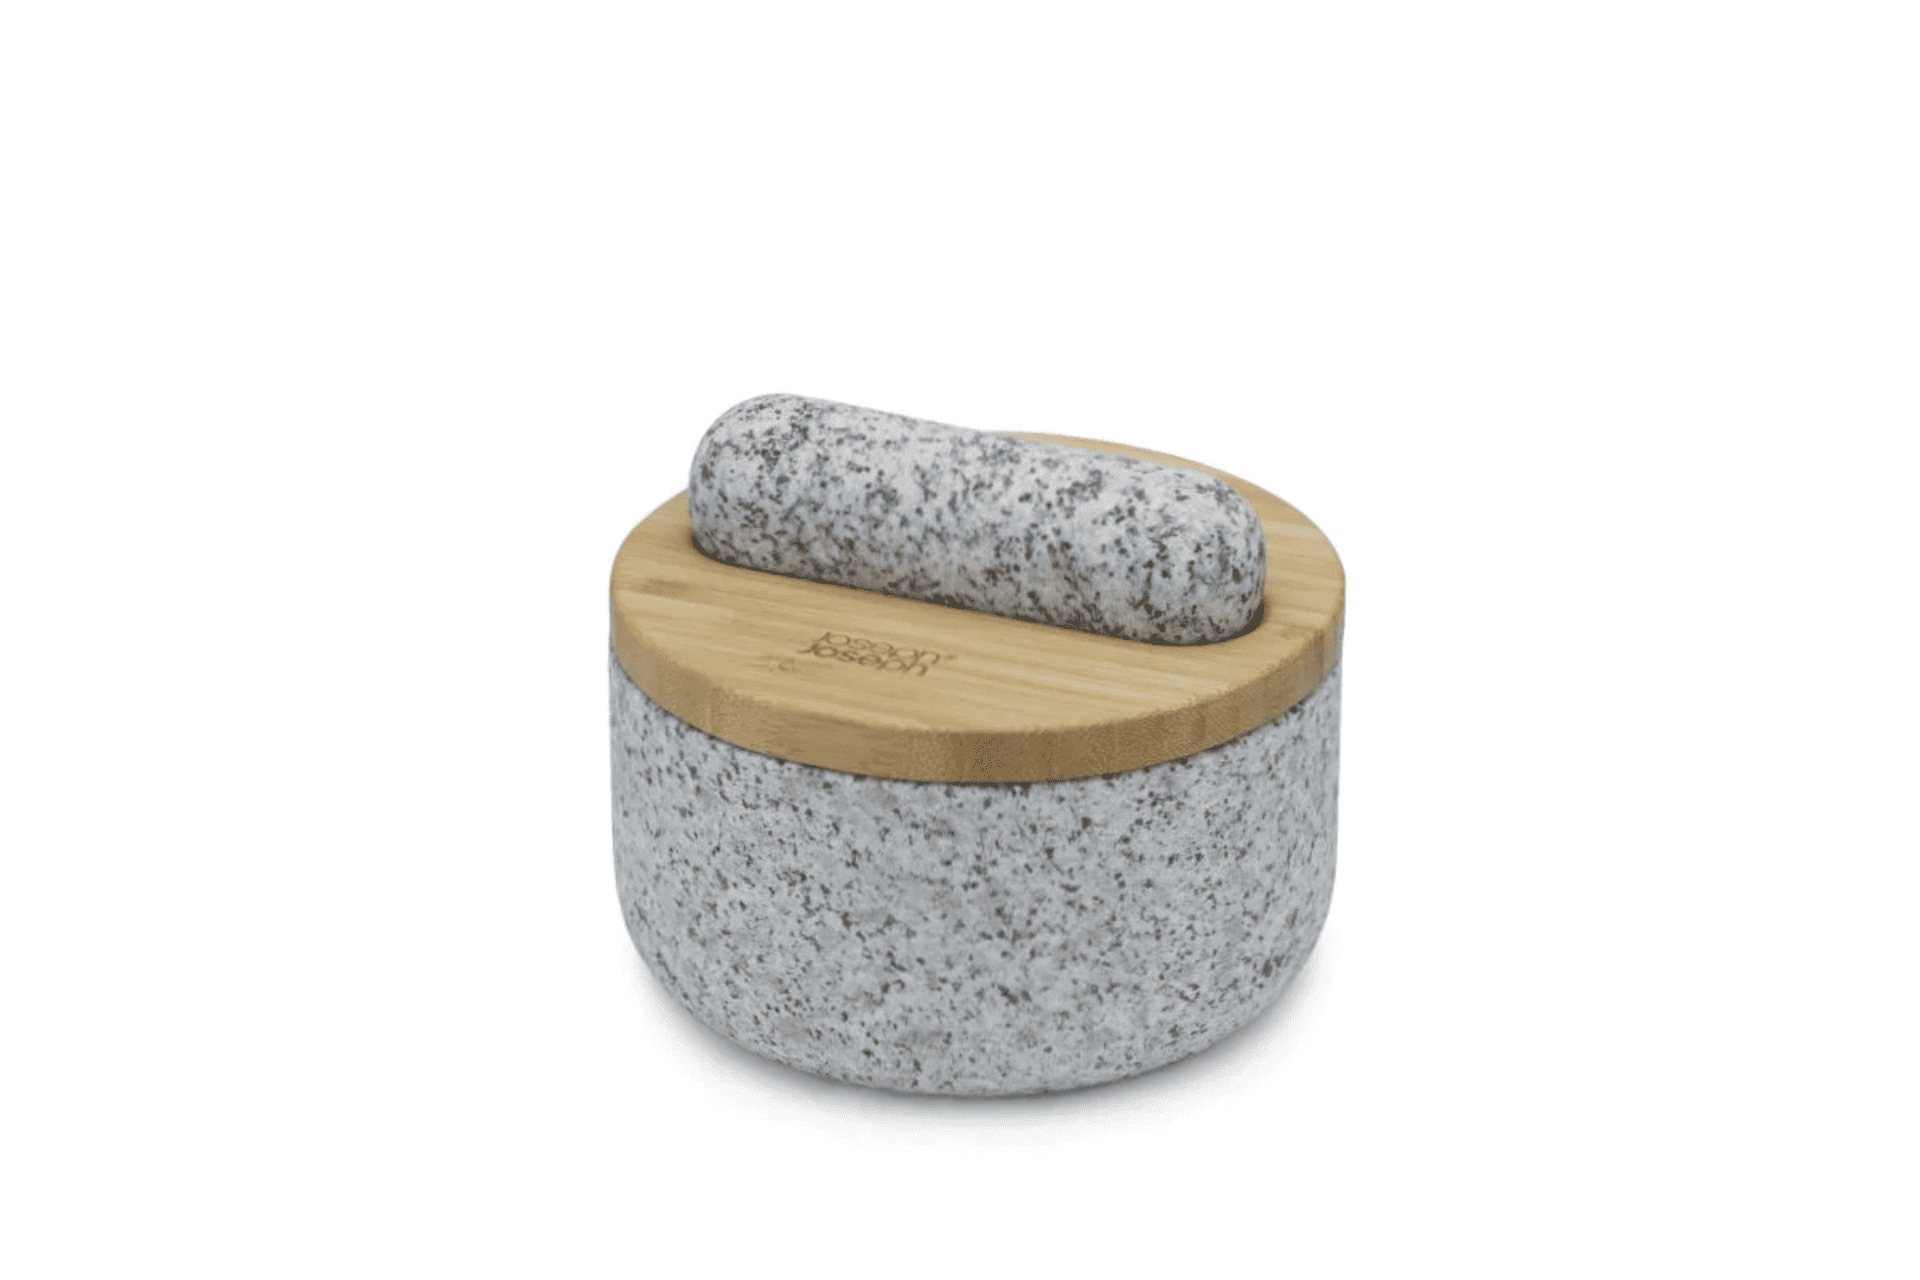 Granite mortar and granite pestle with a wood cover